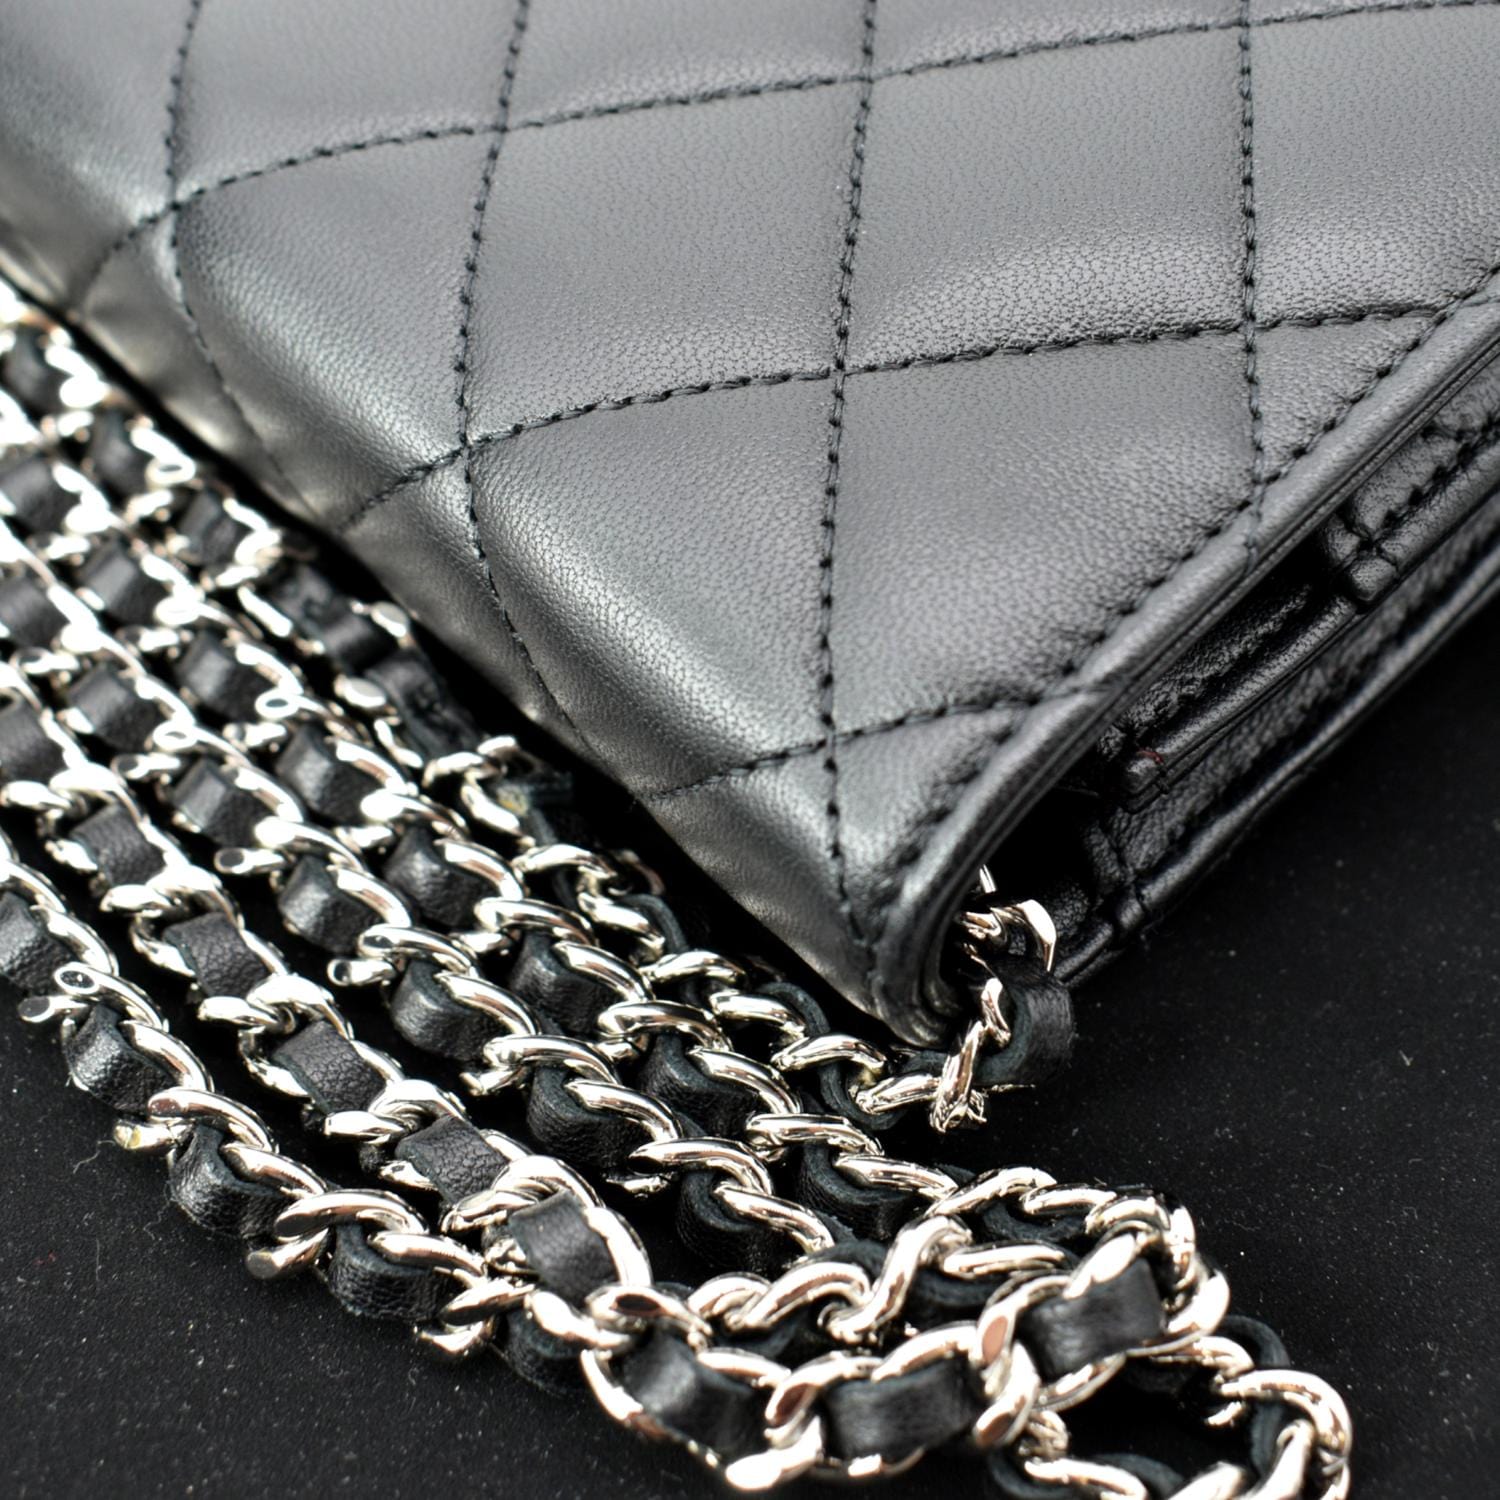 CHANEL Wallet On Chain Lambskin Leather WOC Crossbody Bag Black